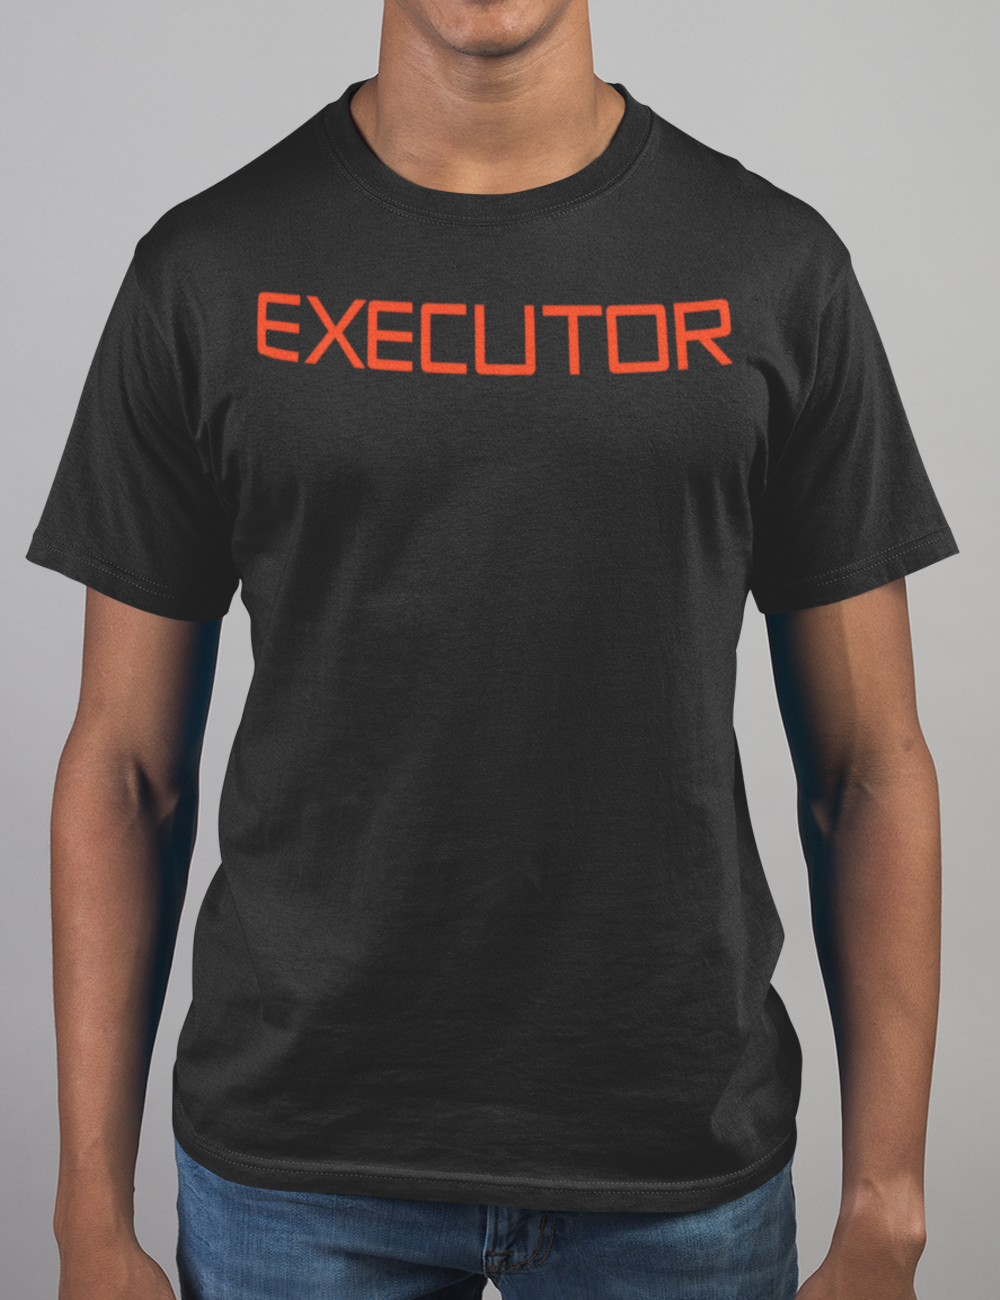 Executor | T-Shirt OniTakai